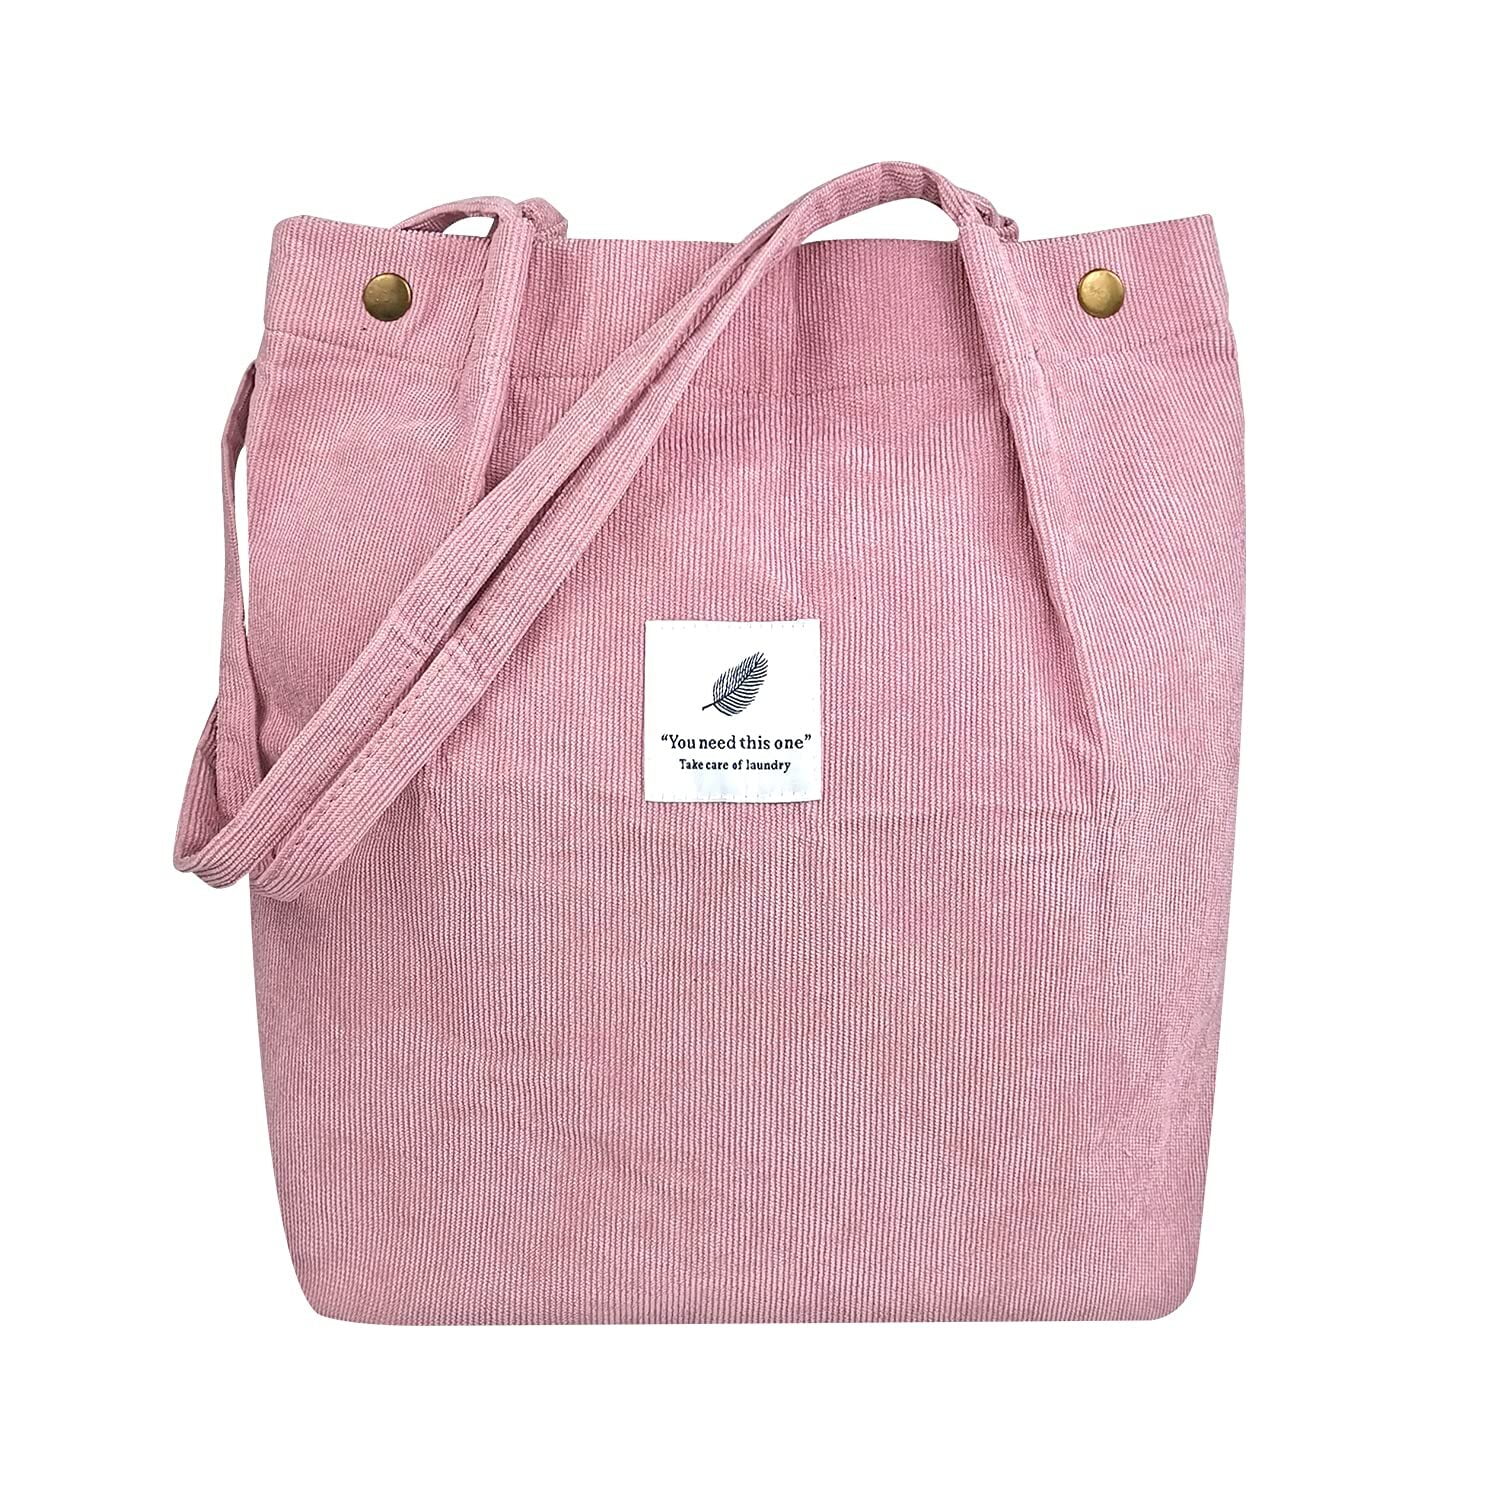 Canvas Tote Bag Reusable Grocery Bags Kitchen Shopping Bag Moon Star Casual  Shoulder Bag Handbag for Outdoor Women